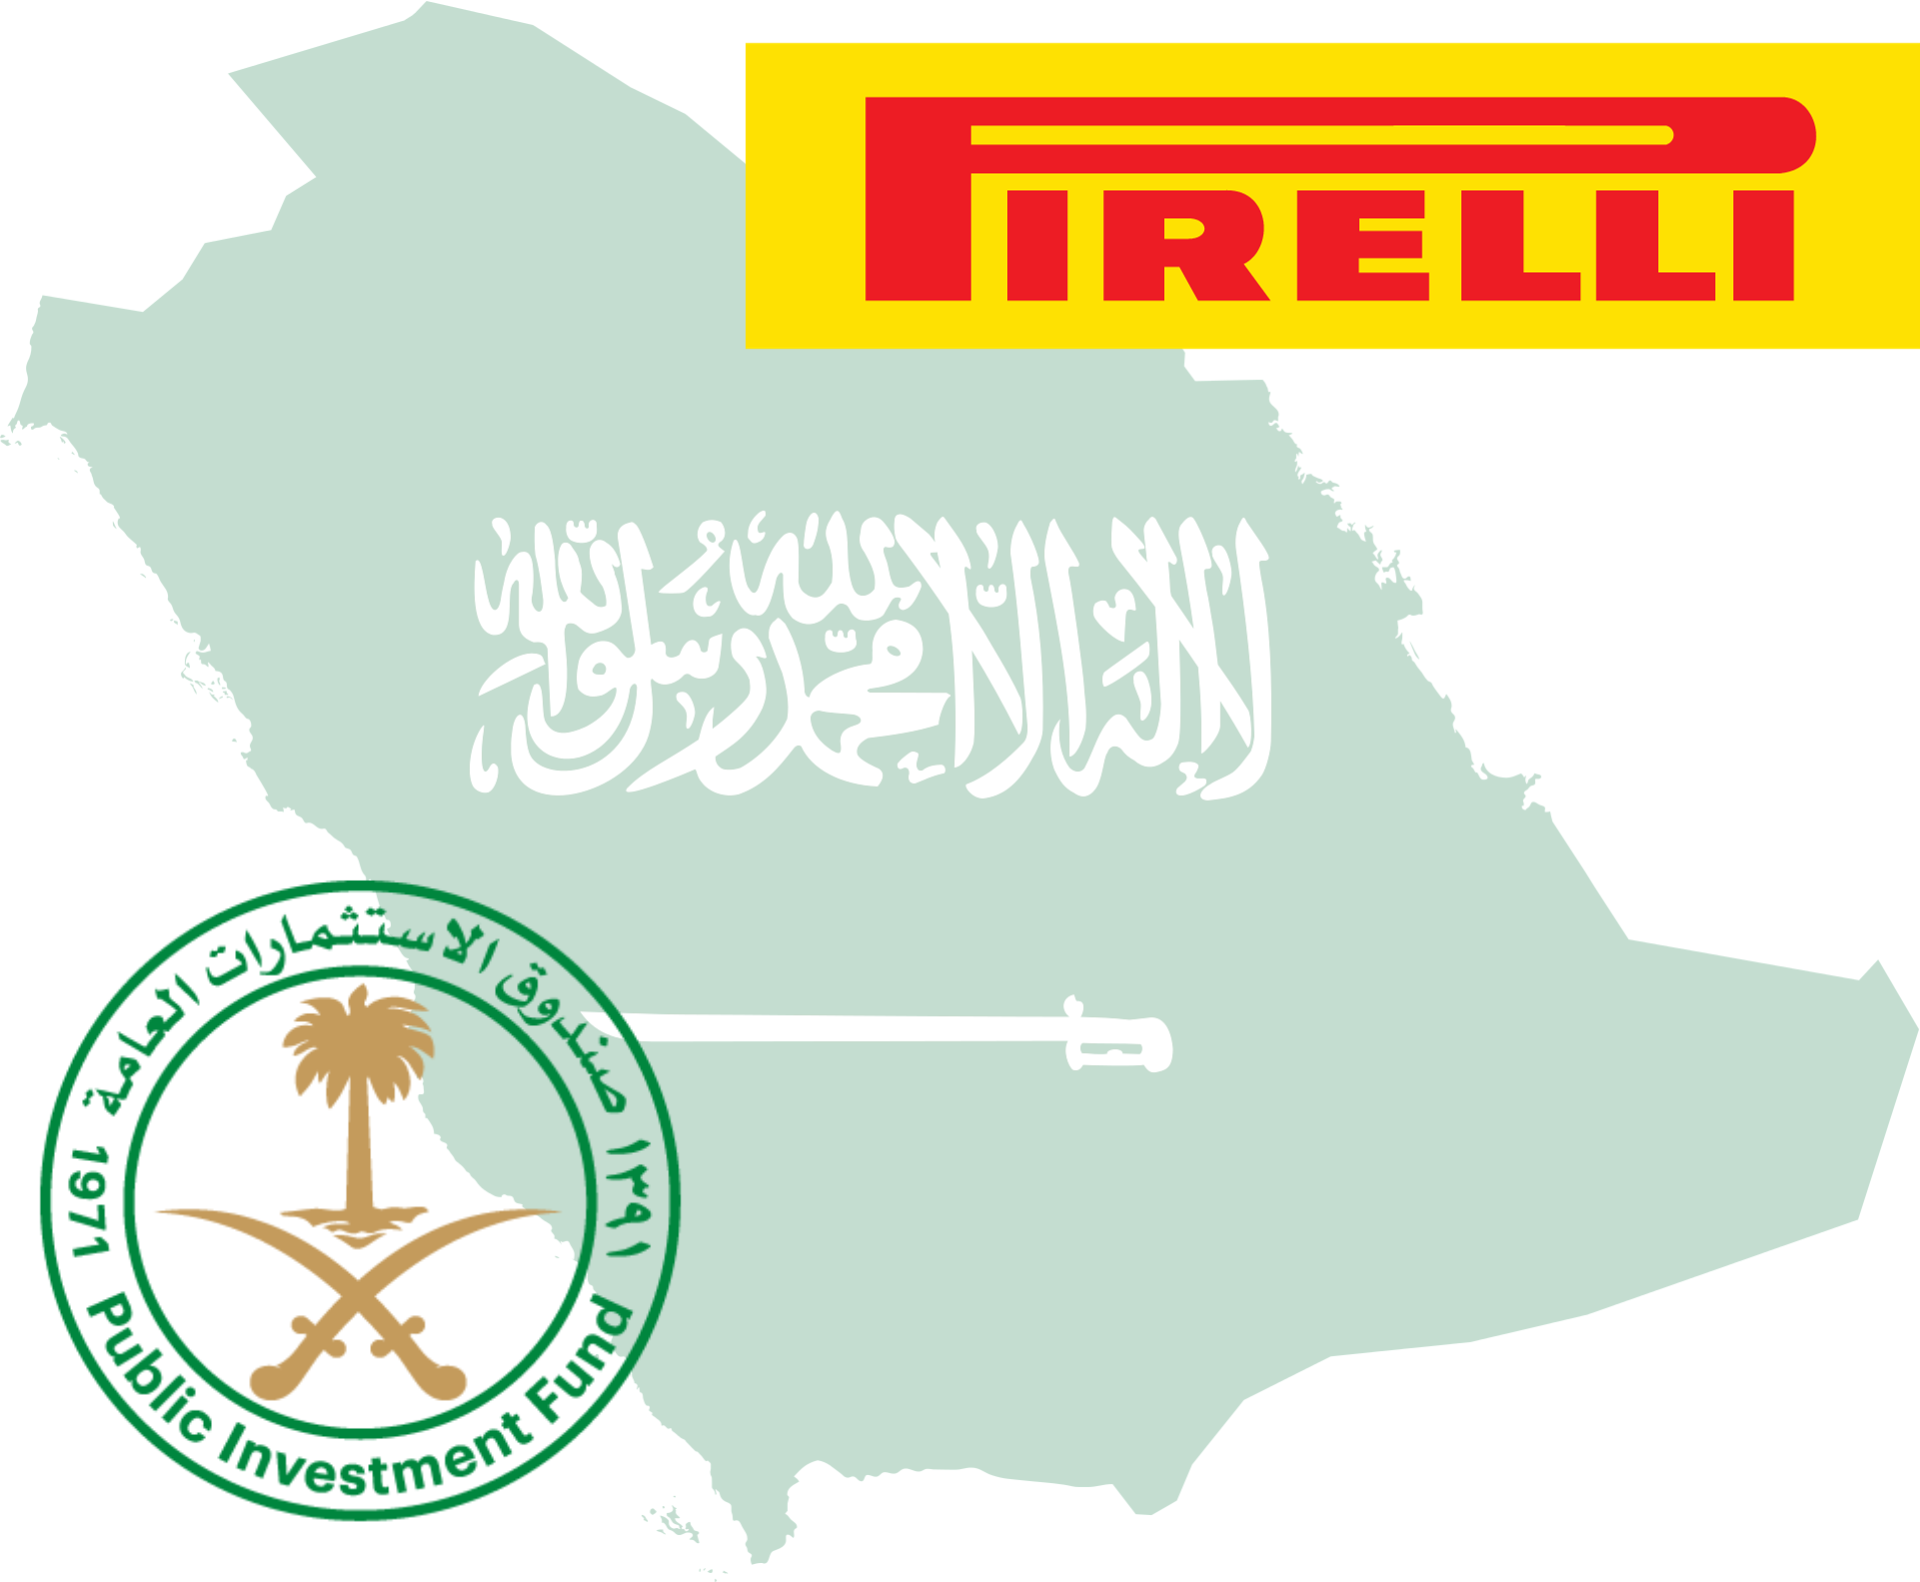 Pirelli forms $550 million Saudi Arabia tyre manufacturing joint venture